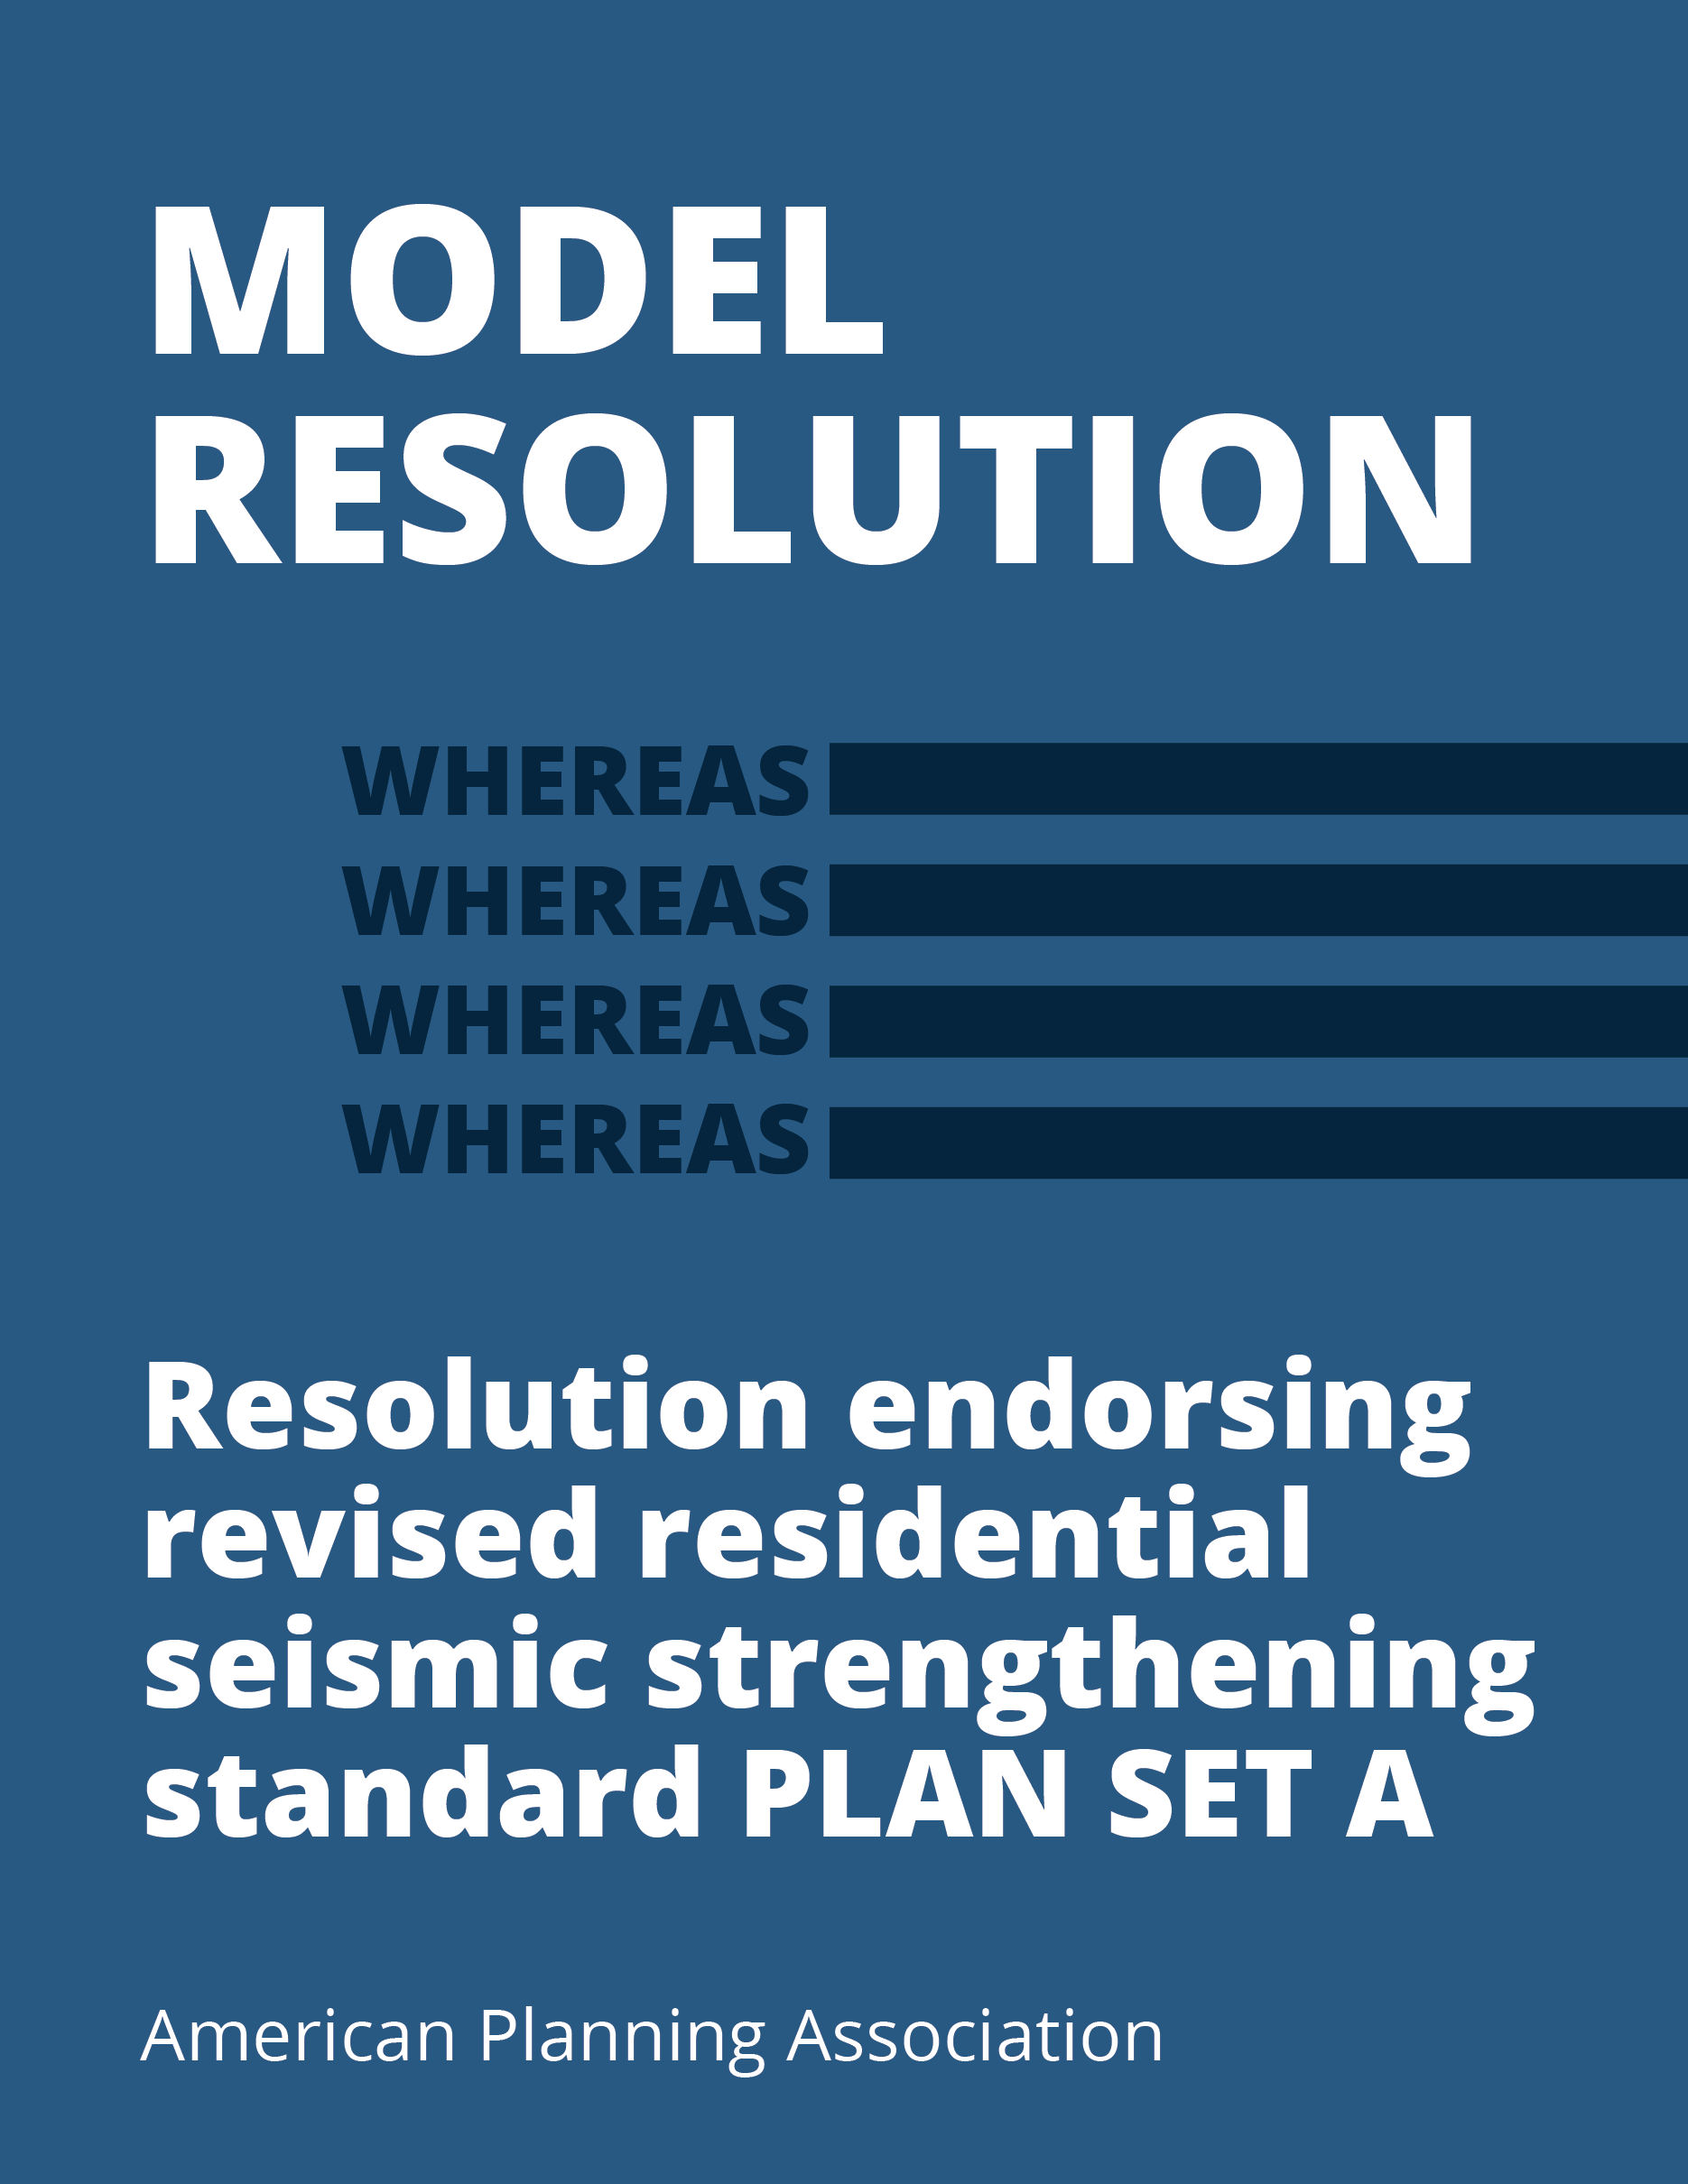 Model Resolution for Crawl Space Retrofit Cover